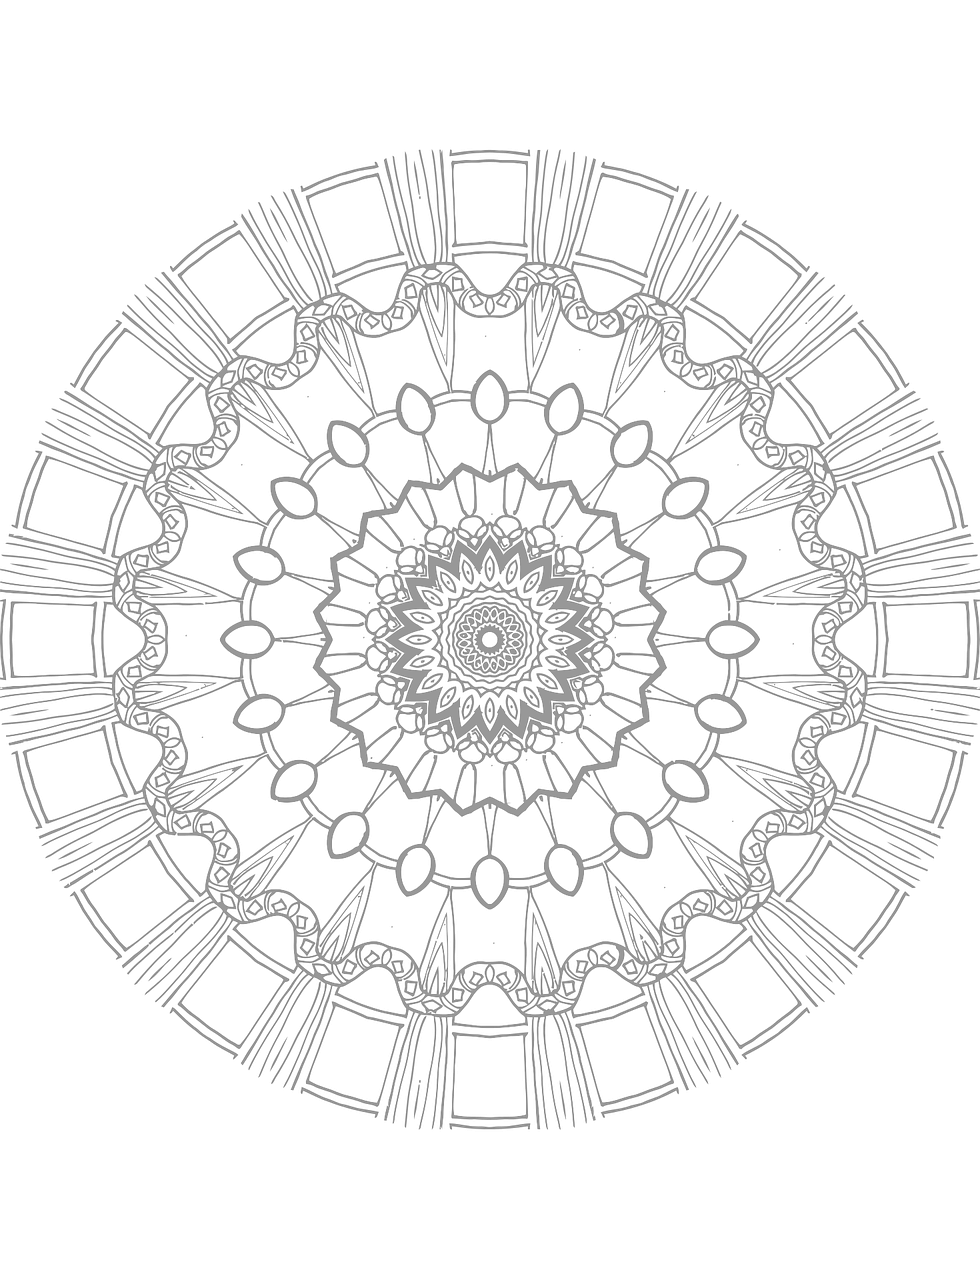 a black and white drawing of a circular design, lineart, by Alexander Fedosav, pixabay contest winner, intricate crystal jelly ornate, symmetrical tarot card, 2 0 5 6 x 2 0 5 6, symmetrical rim light